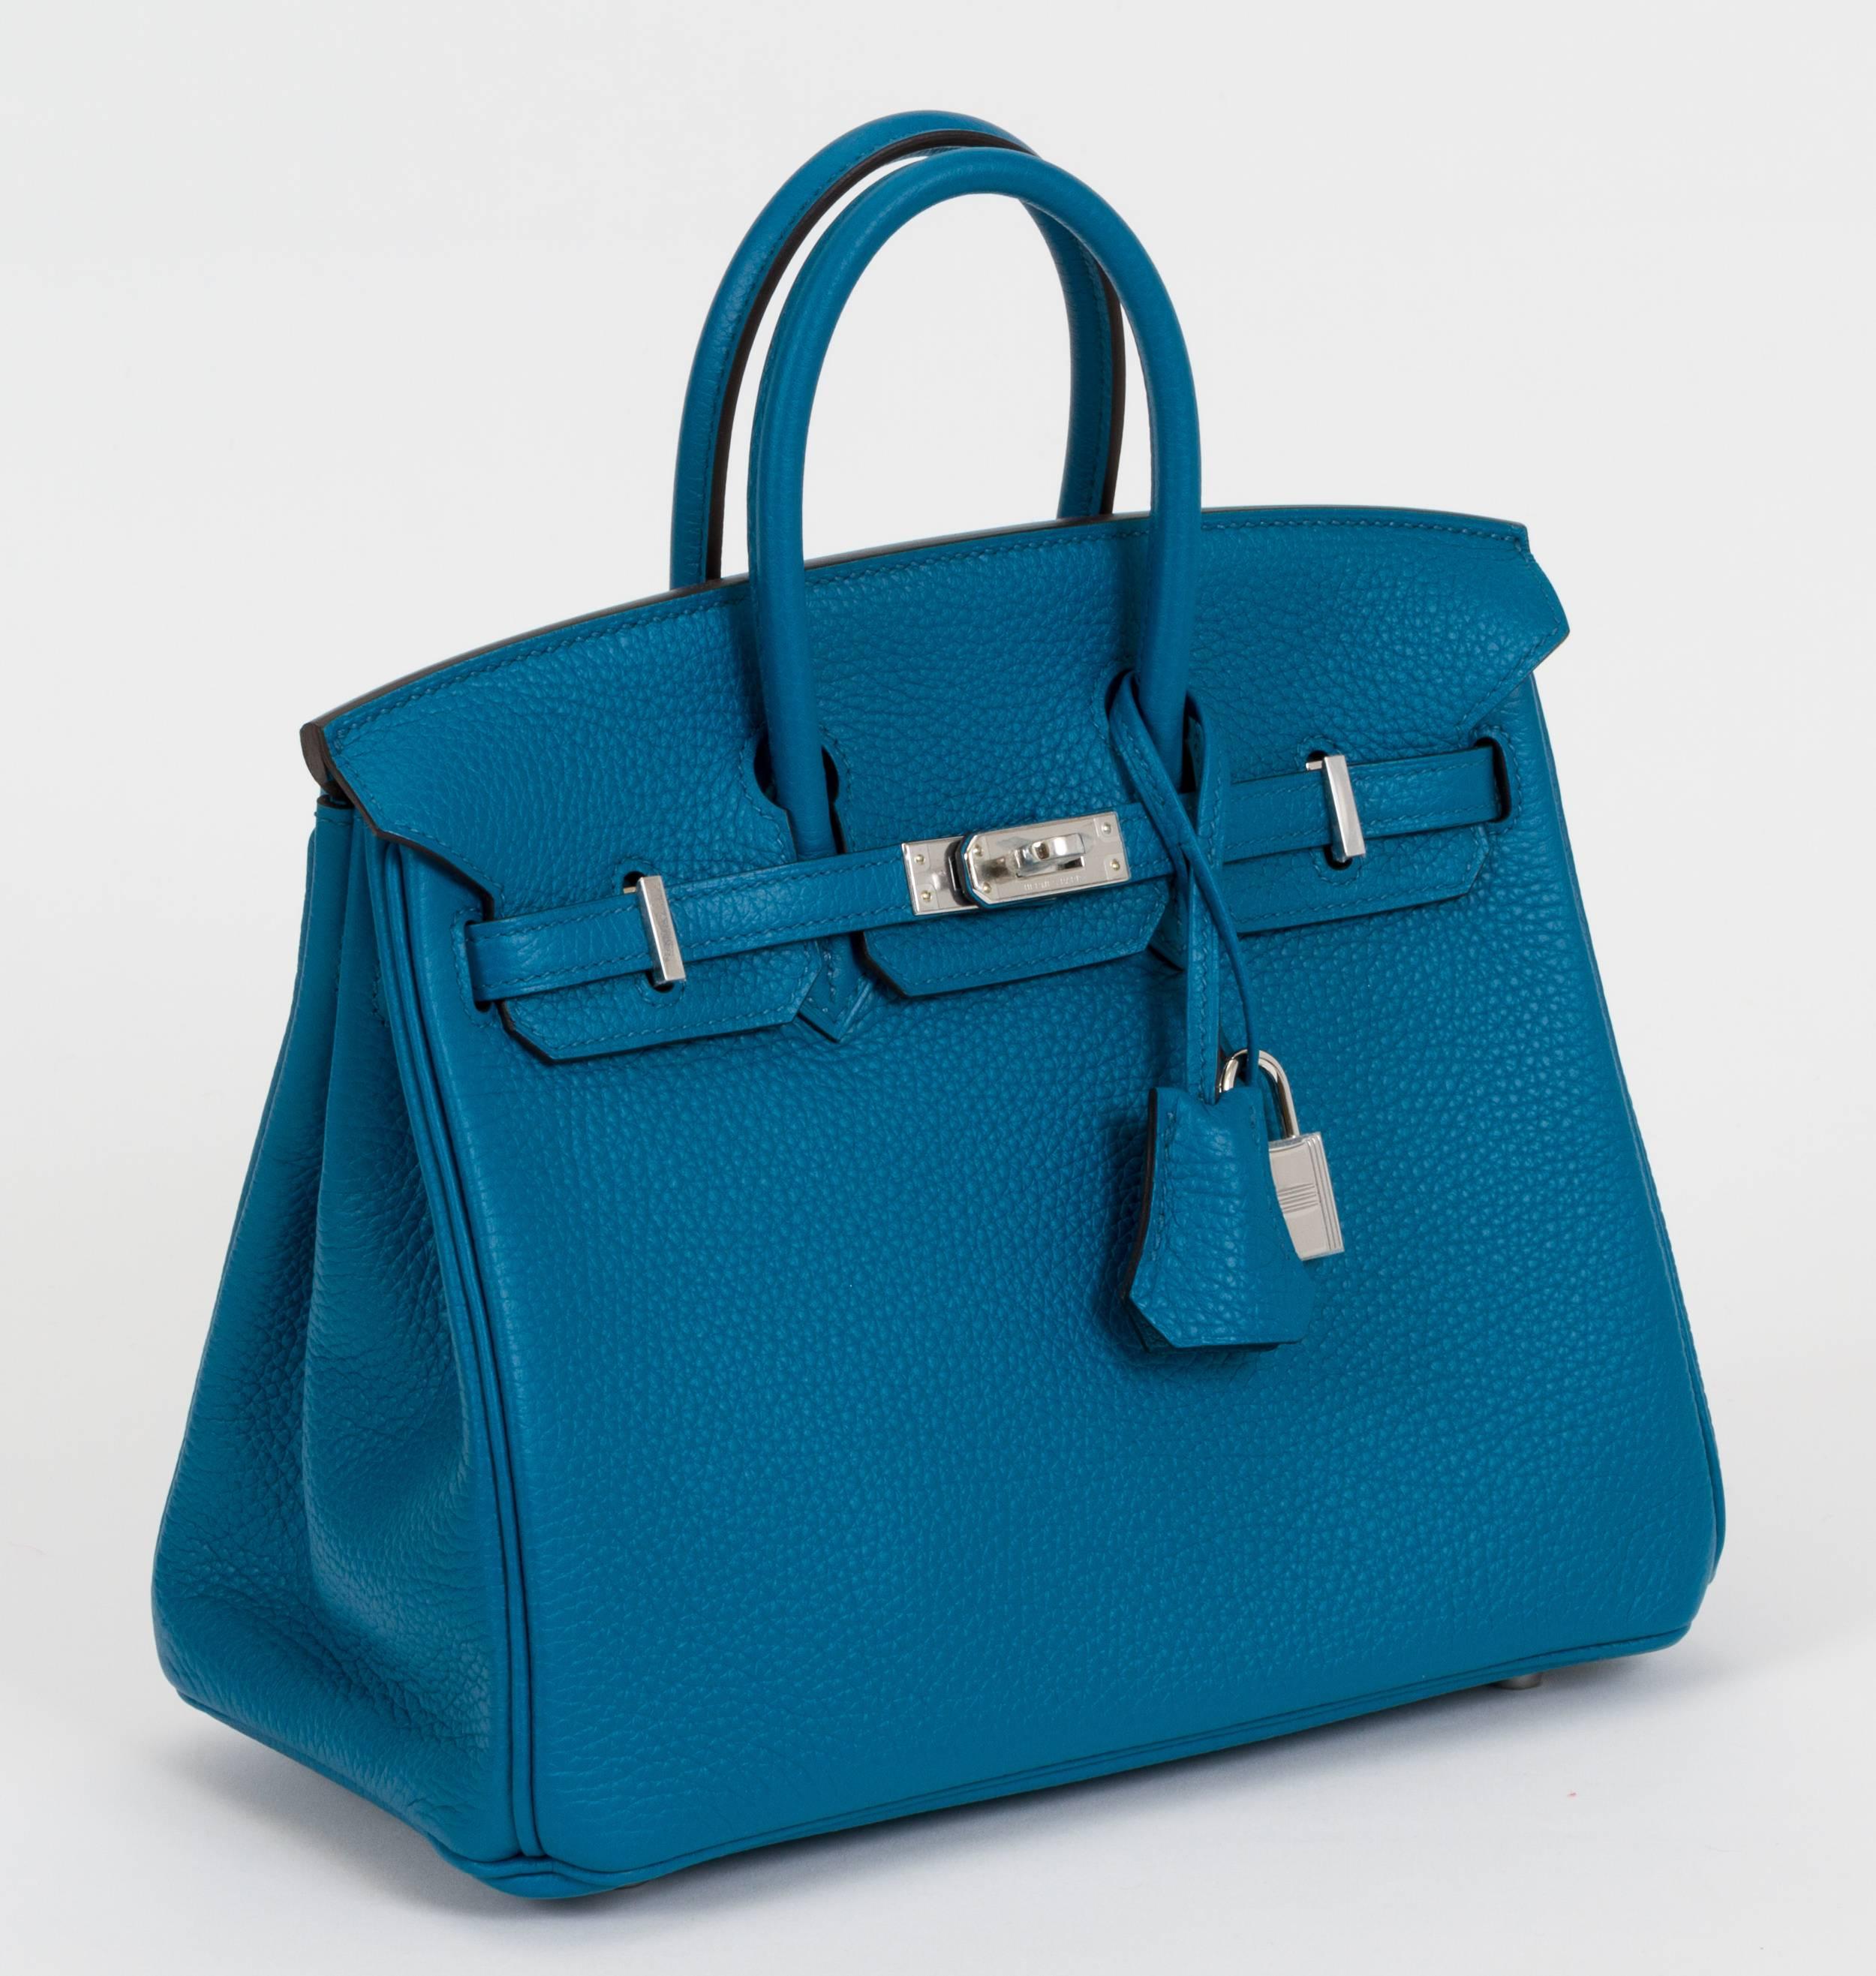 Hermès 25cm Birkin bag in blue izmir Togo leather and silvertone hardware. Handle drop, 3